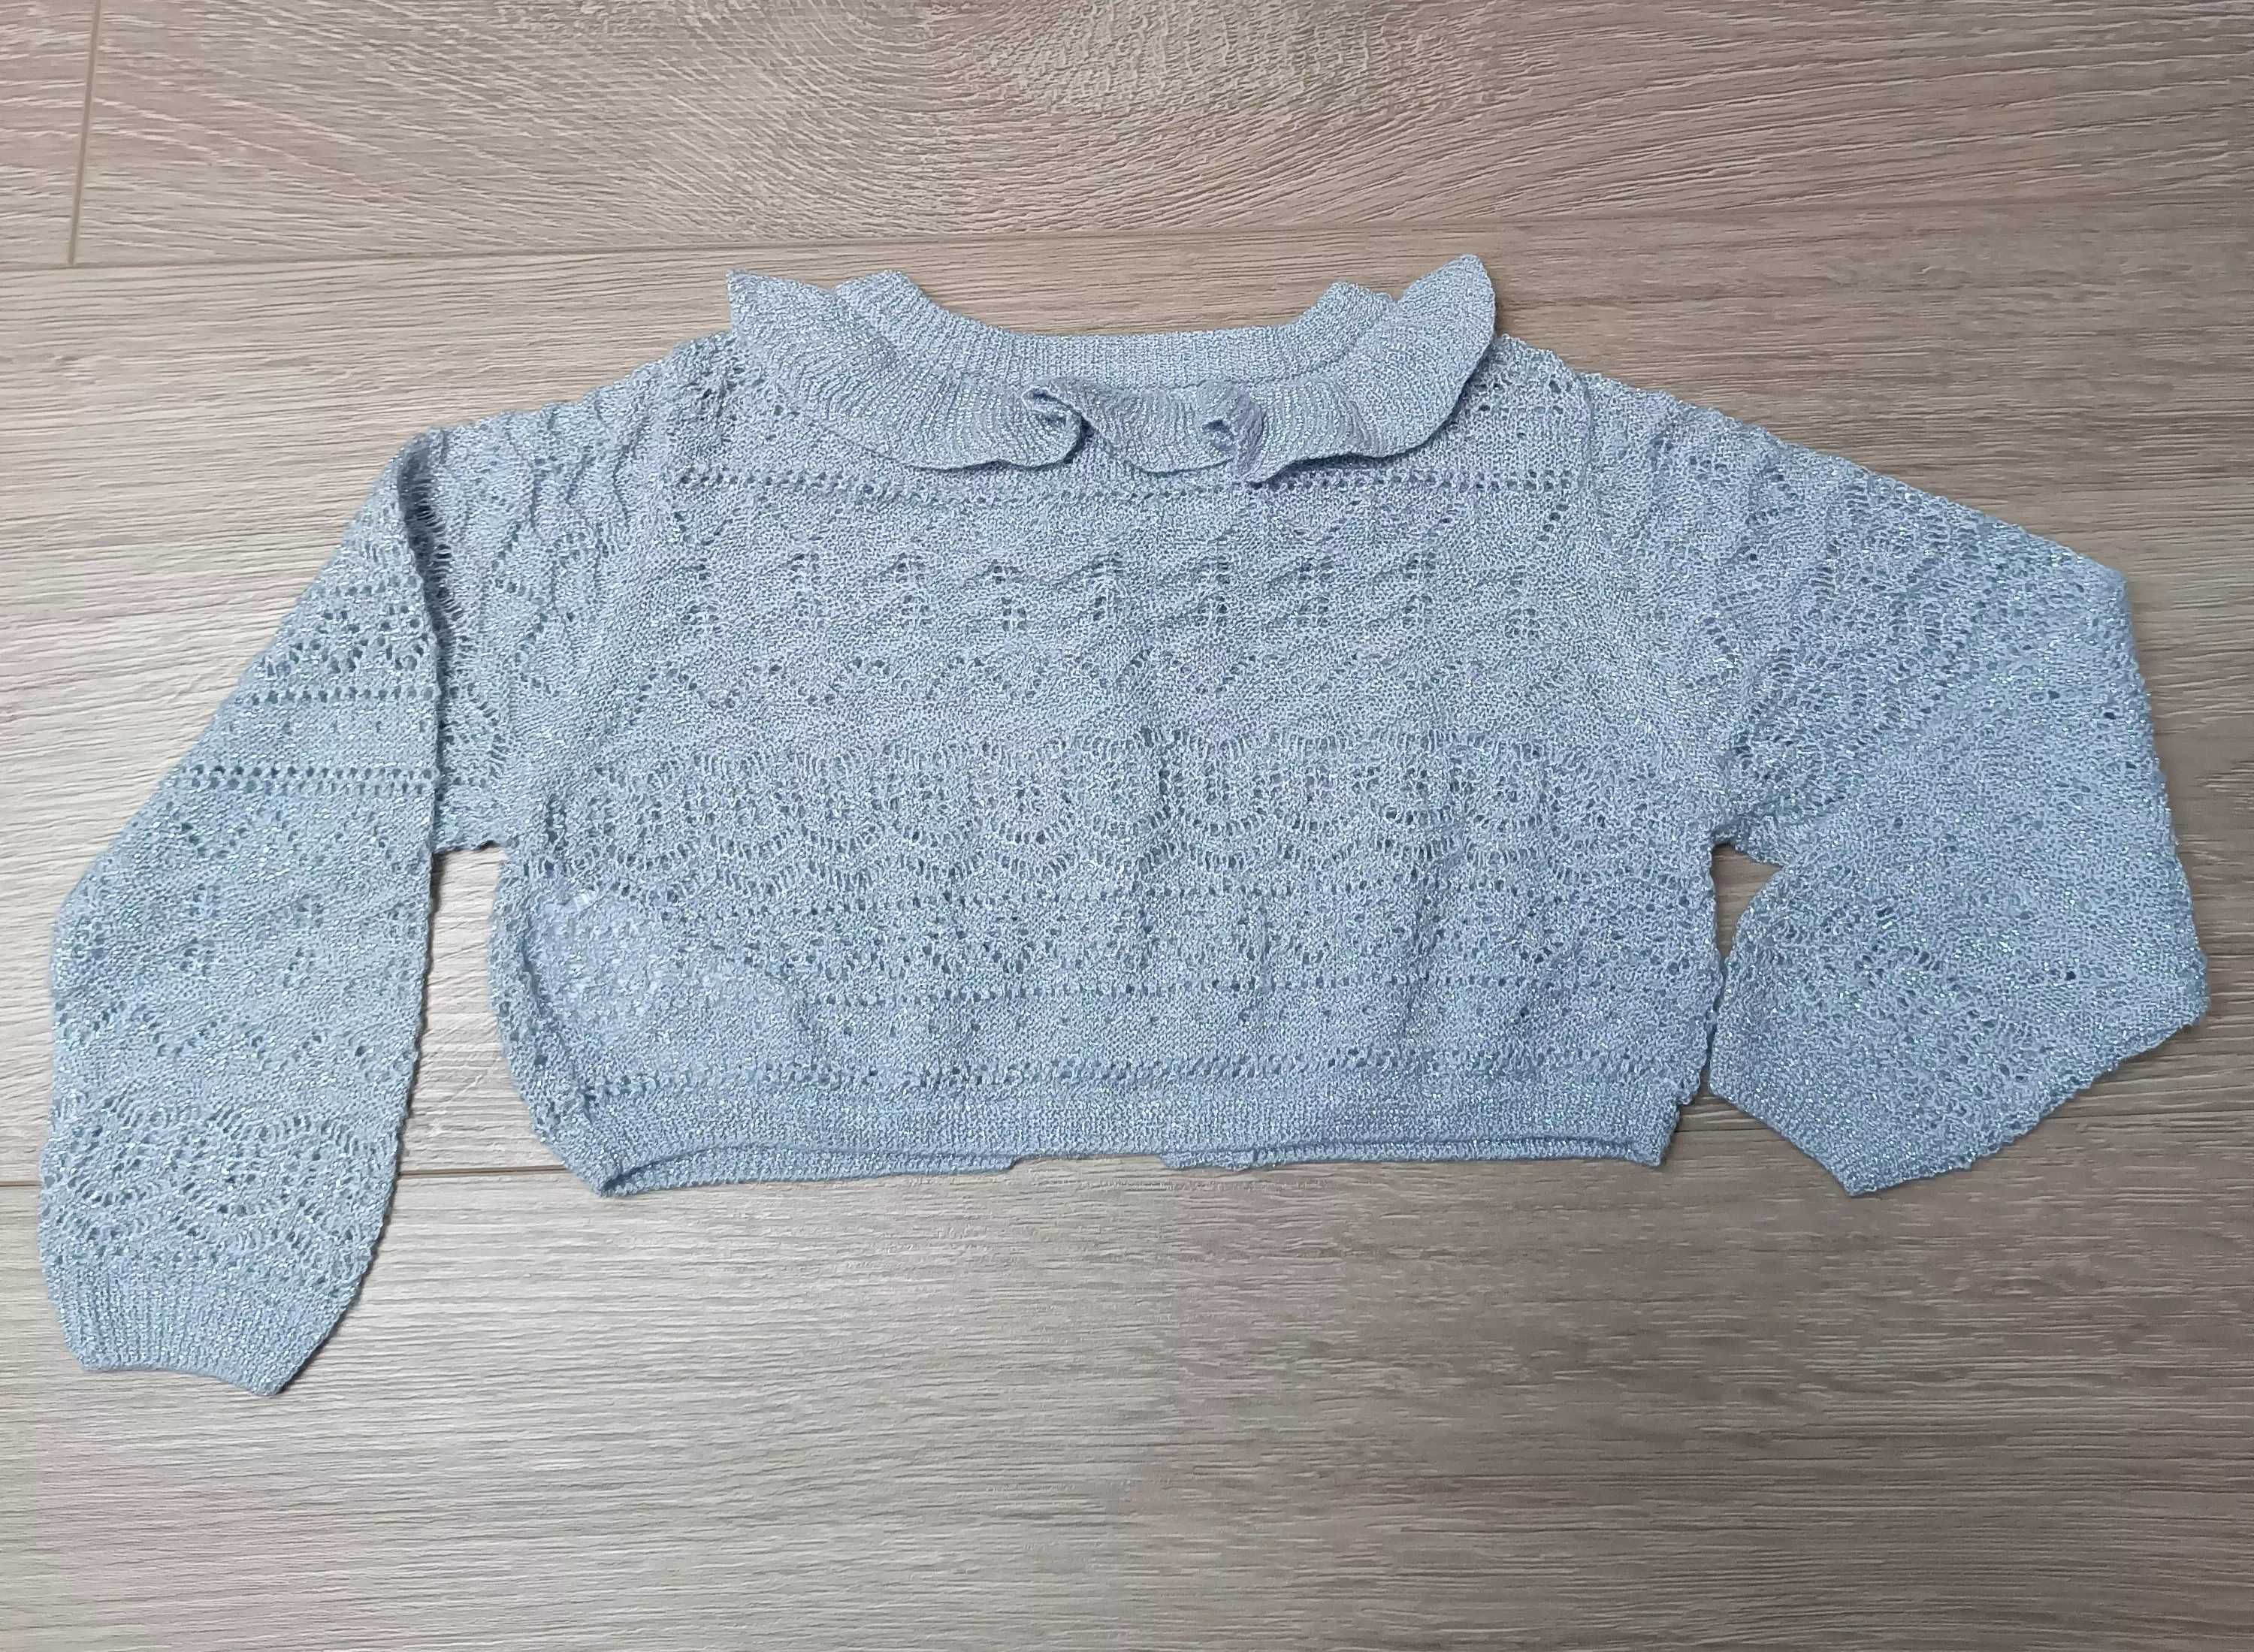 Szary sweterek bolerko srebro falbanki 'Next' 74